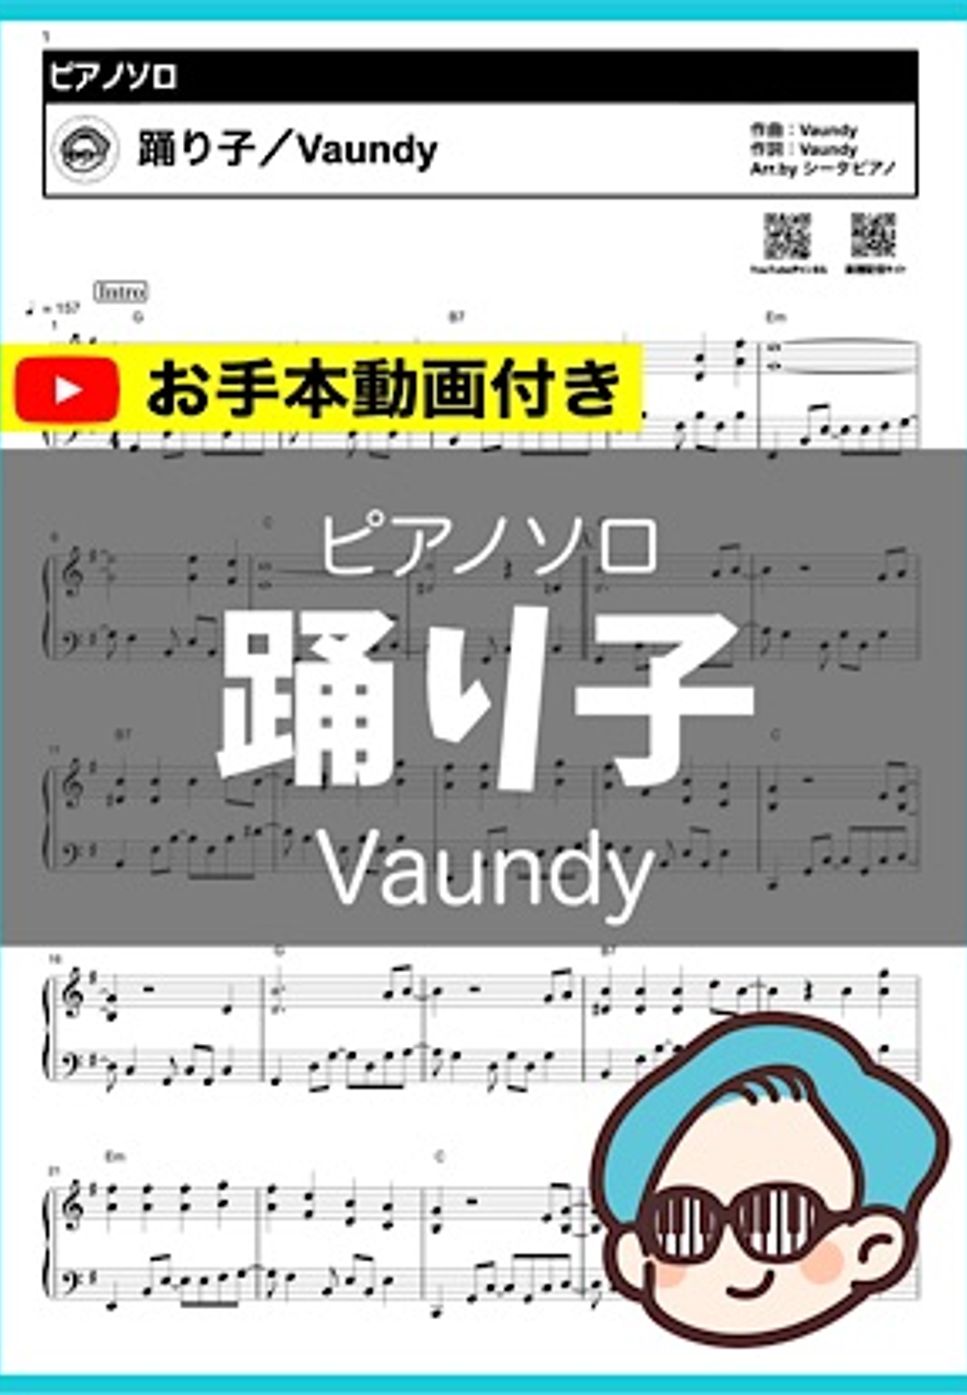 Vaundy - 踊り子 by シータピアノ